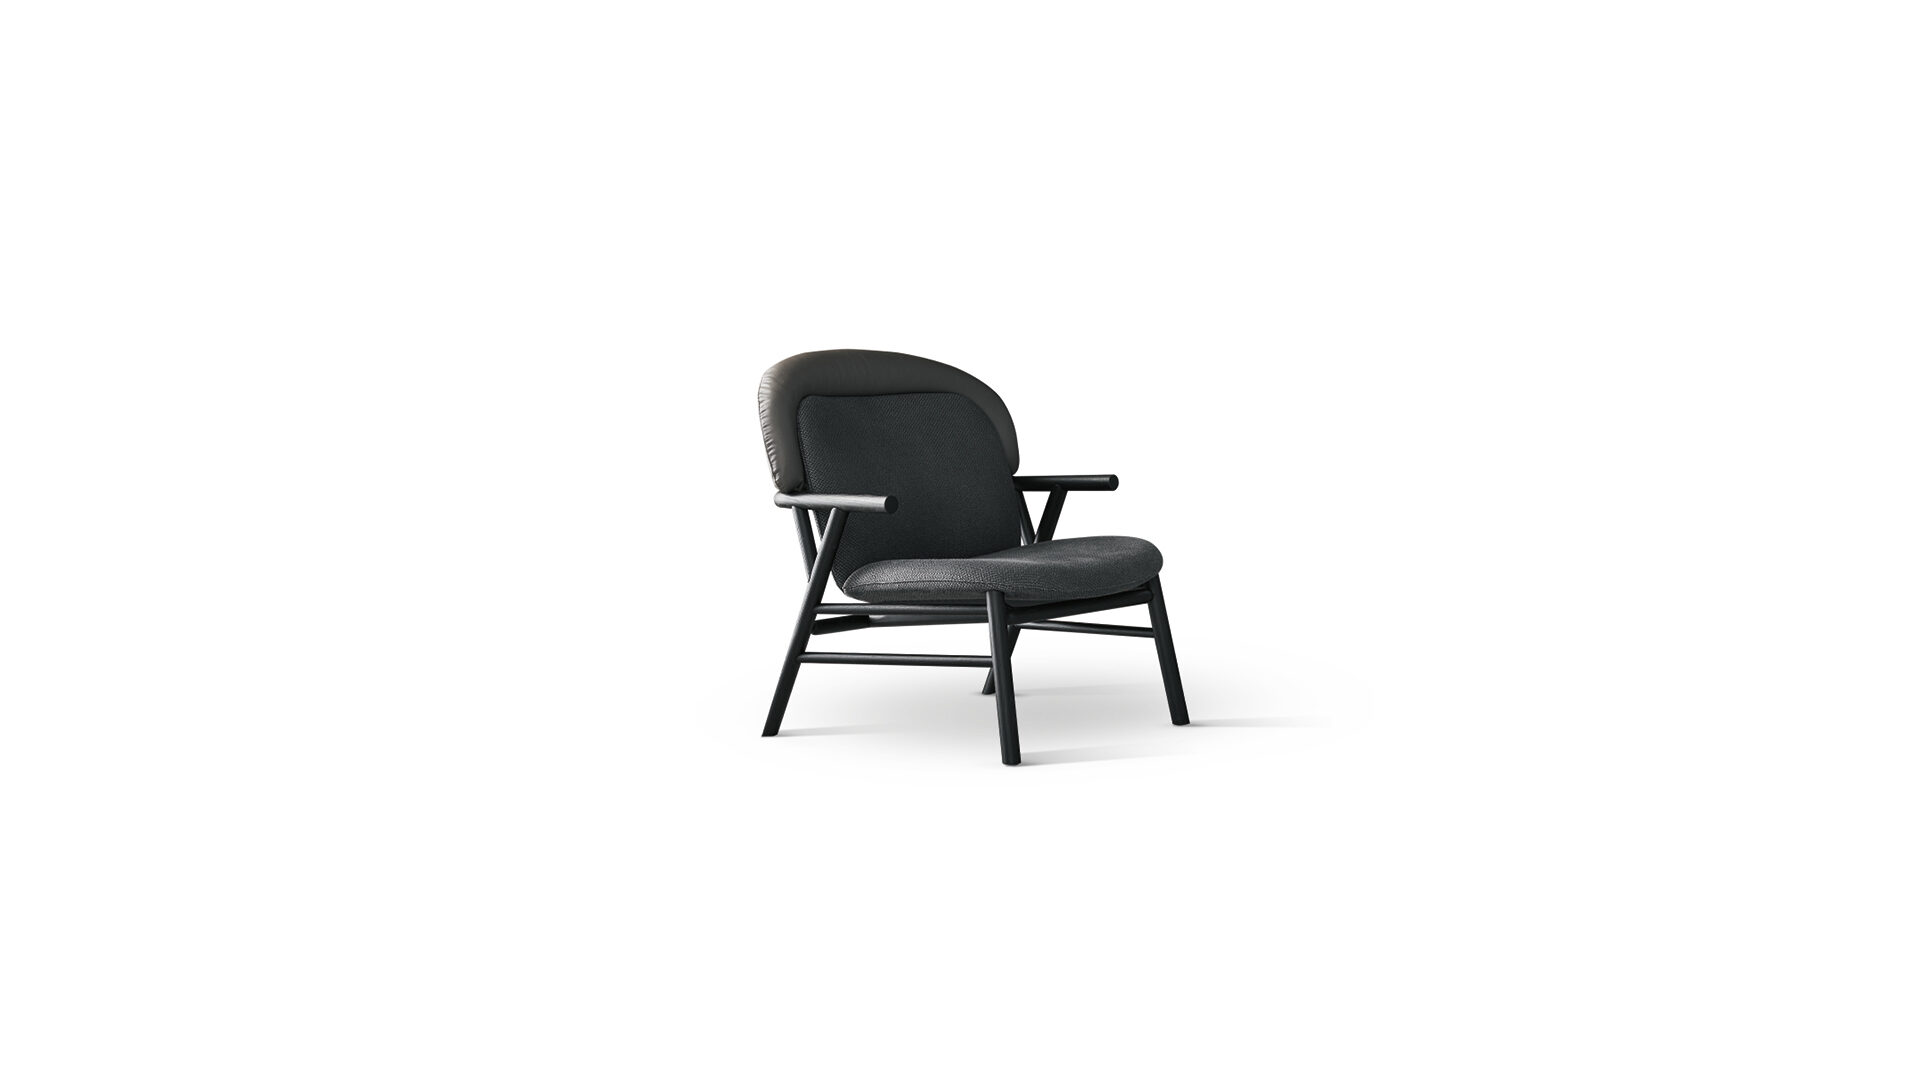 bonaldo-poltrone-morgana-armchair-main-slider-01-1920x1080-jpg